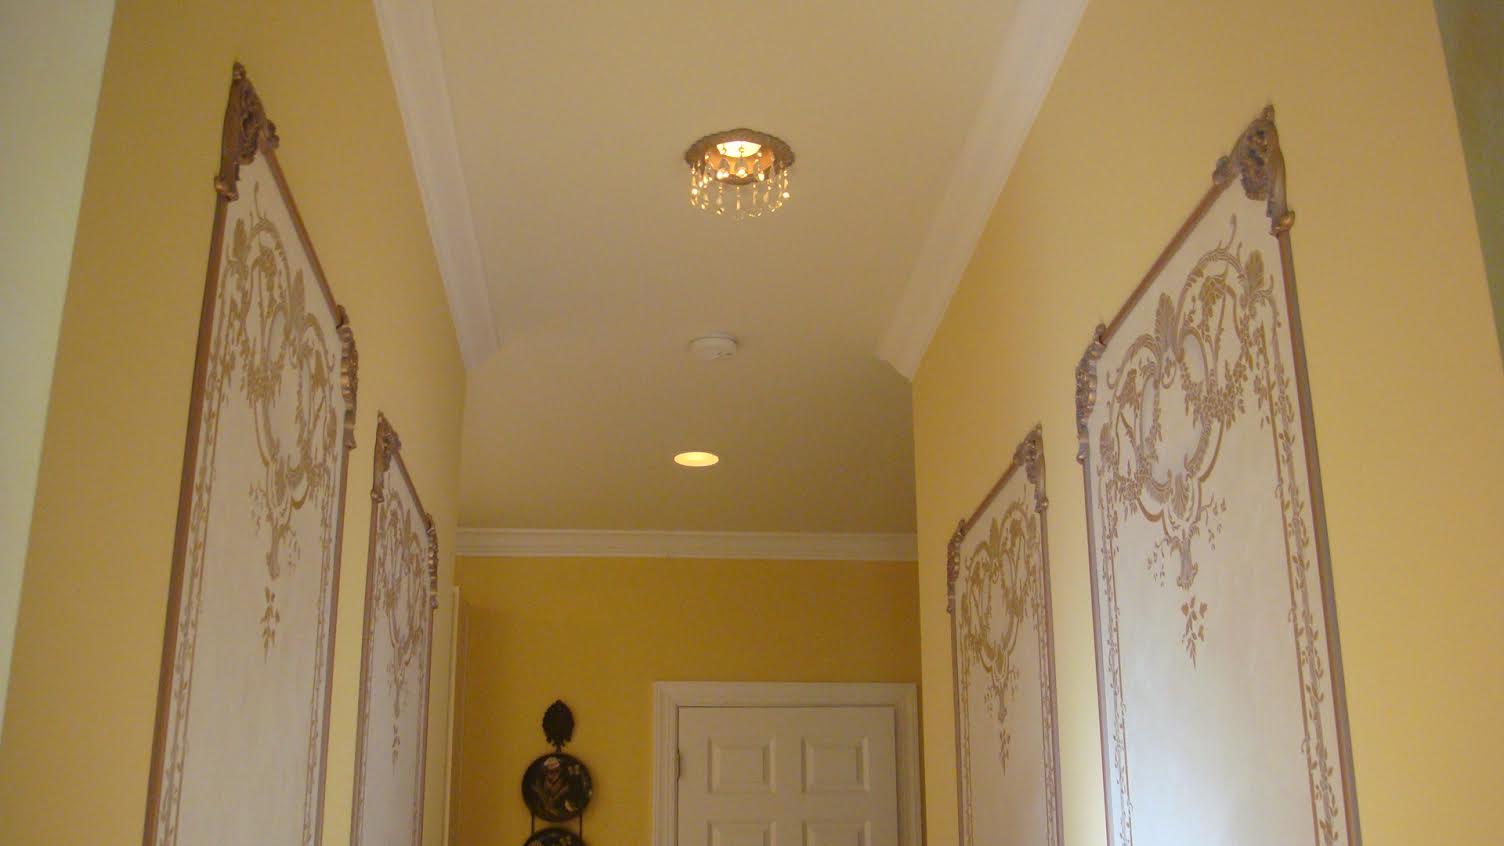 Decorative Recessed Light Chandelier in a hallway